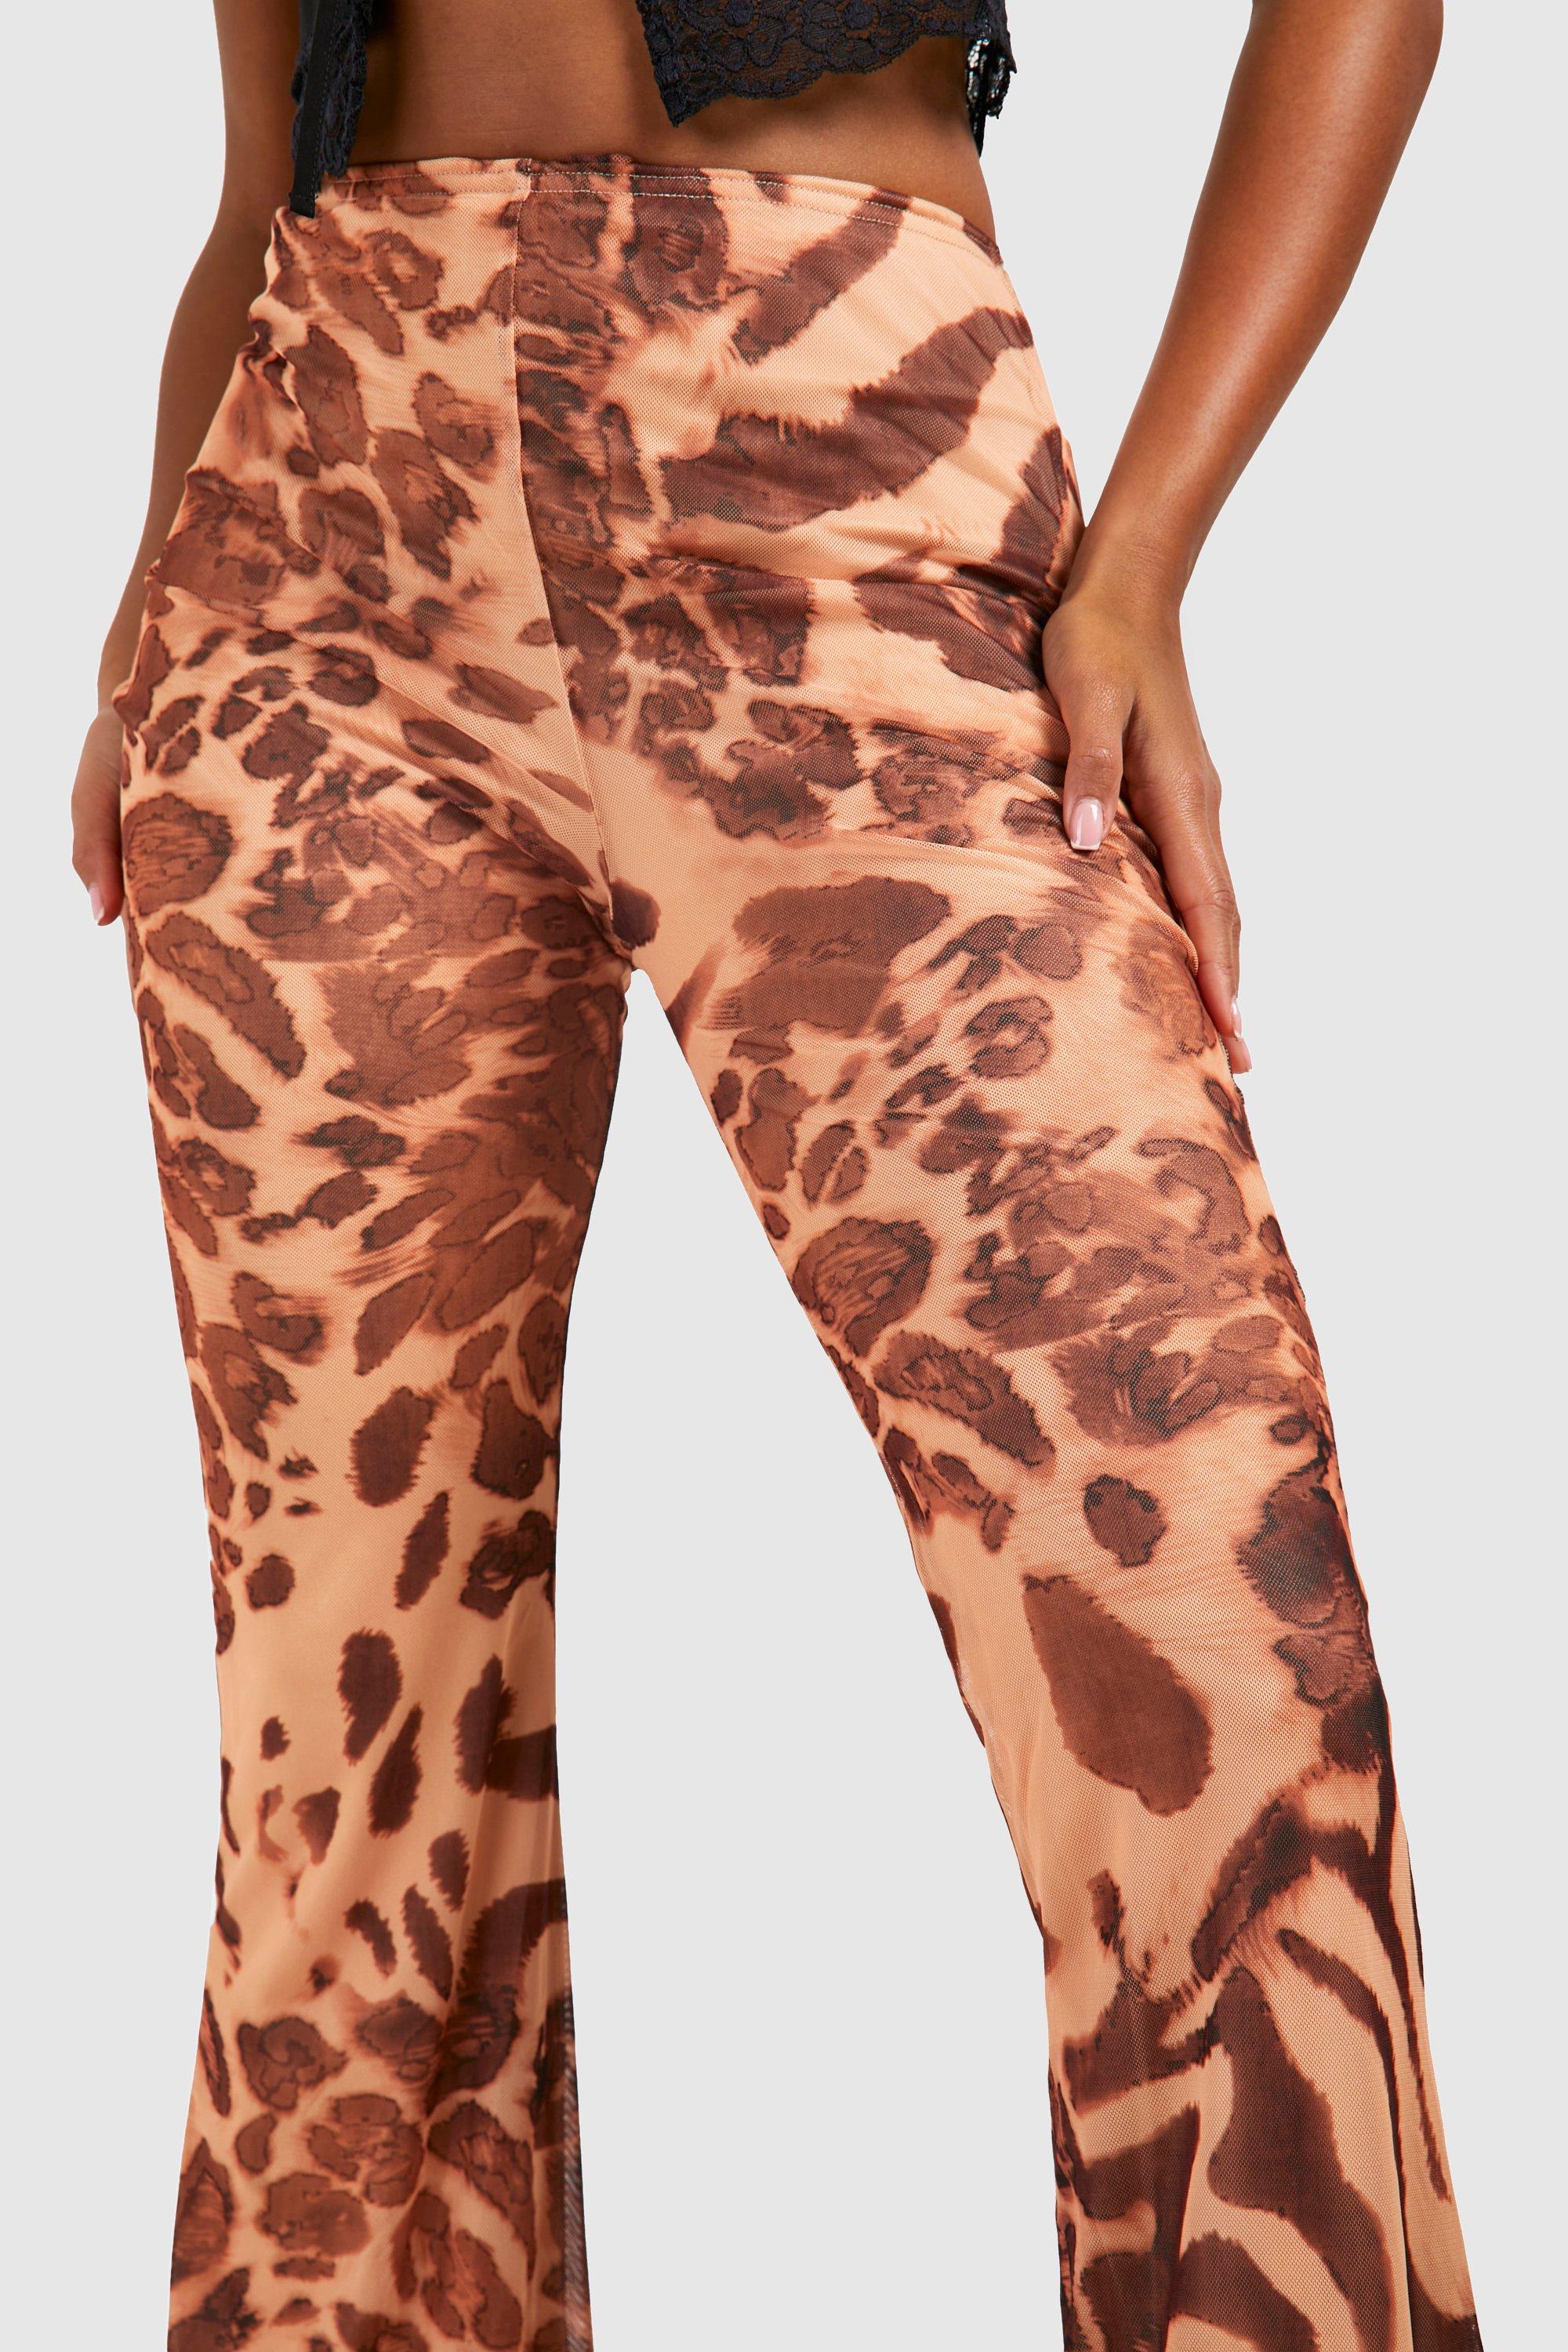 https://media.boohoo.com/i/boohoo/gzz63627_tan_xl_3/female-tan-leopard-printed-mesh-flared-pants